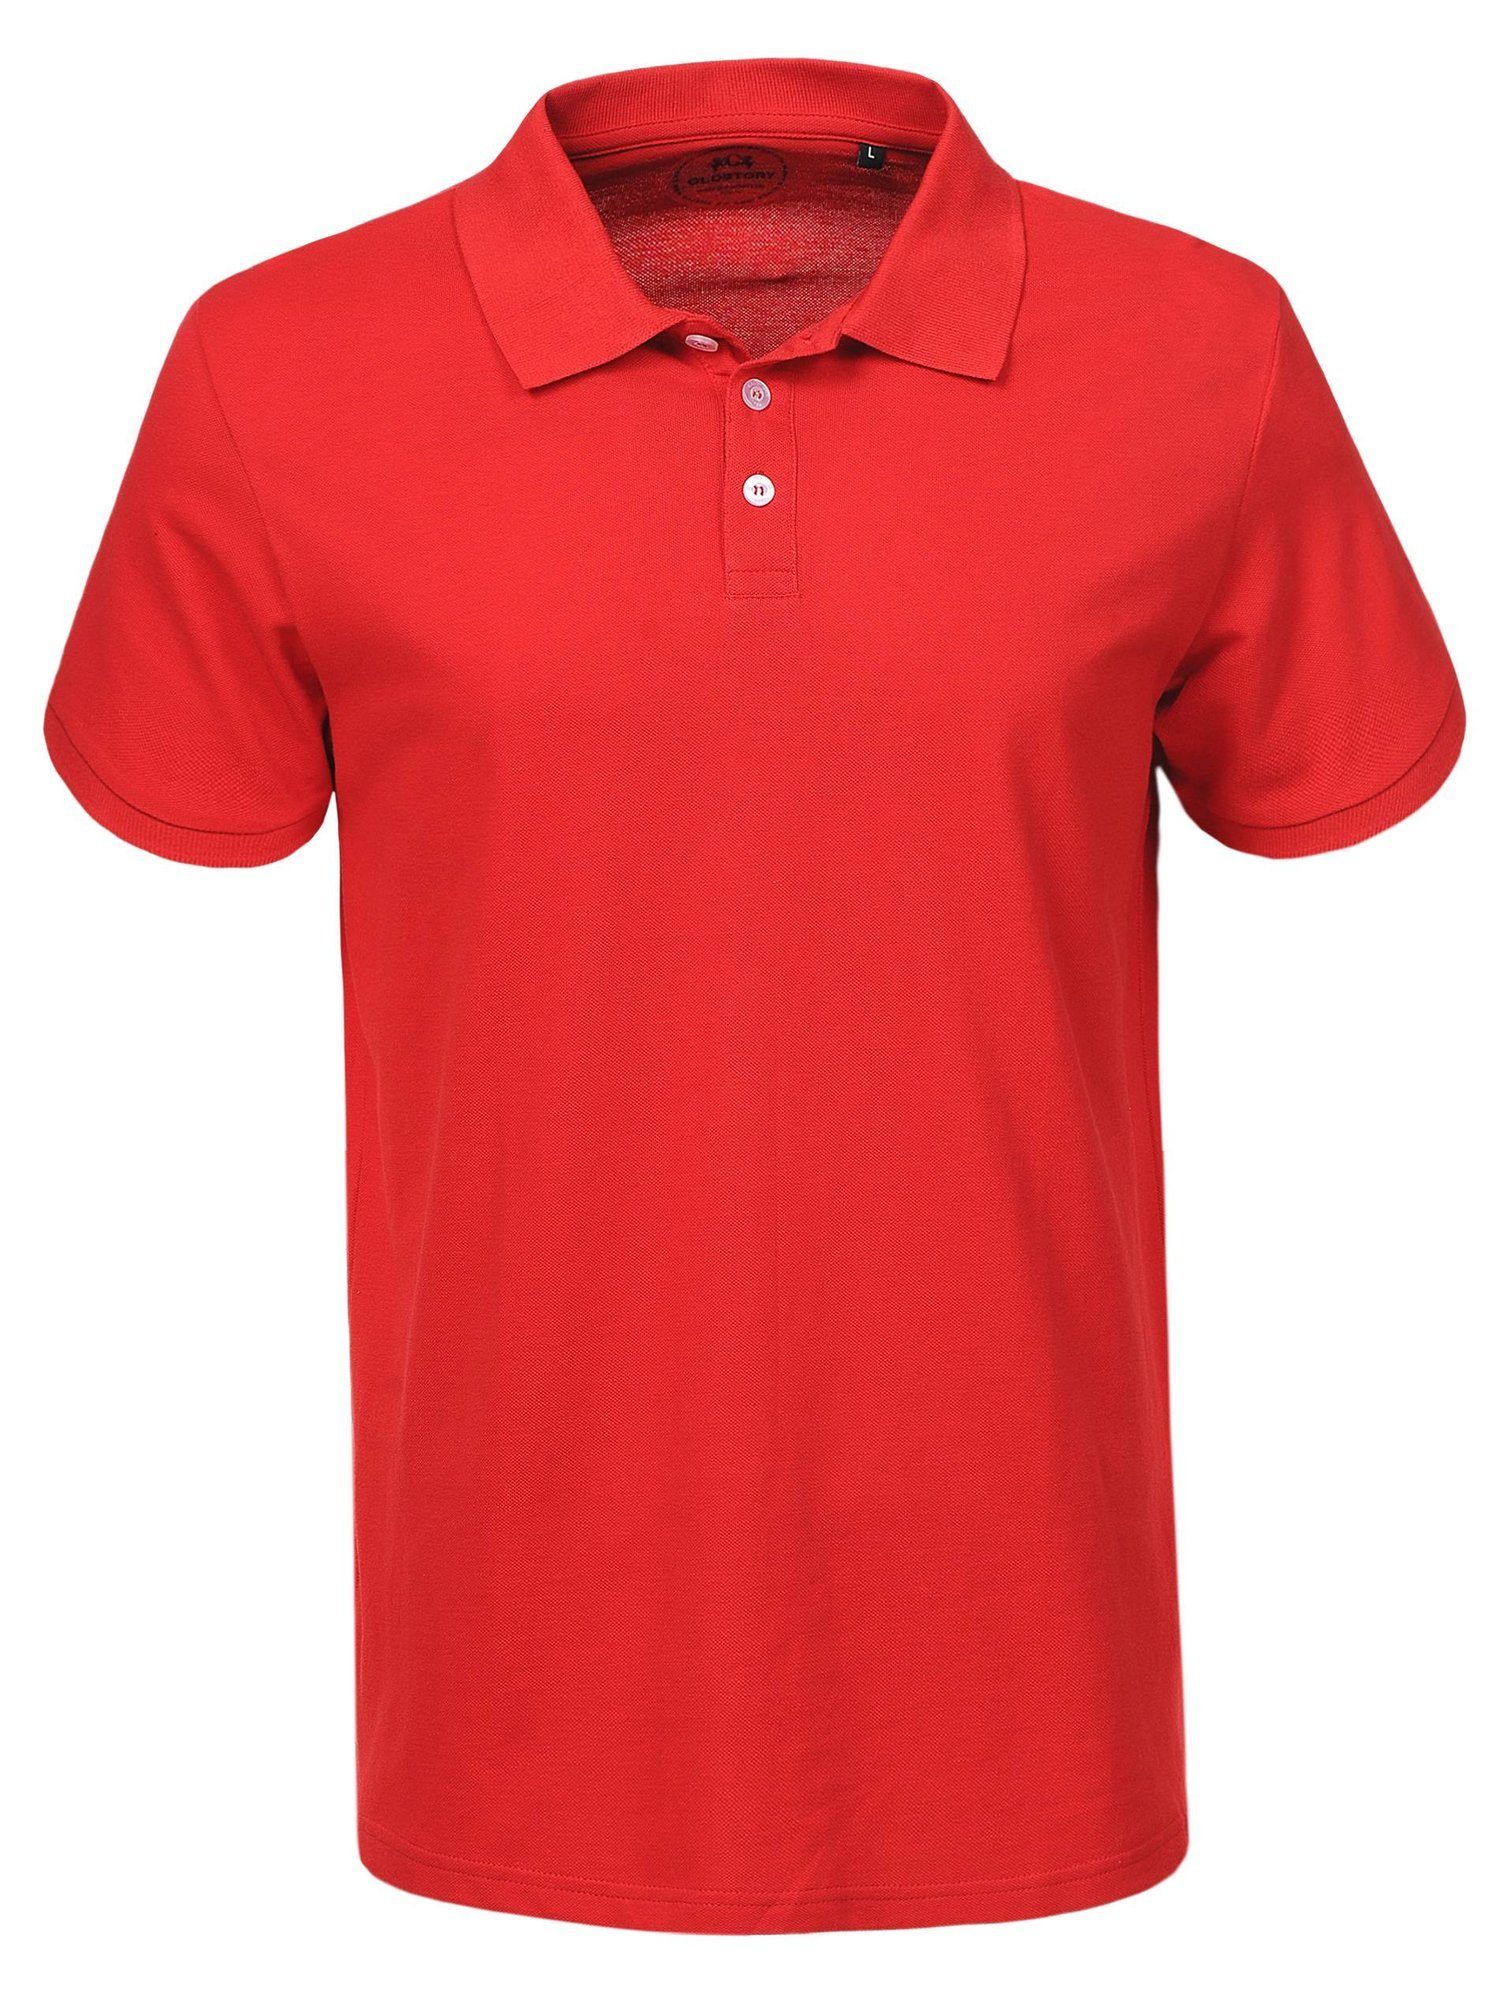 GLO-STORY Poloshirt Regular Herren Kurzarm Basic Polo GLO-STORY Polohemd Shirt Rot Poloshirt